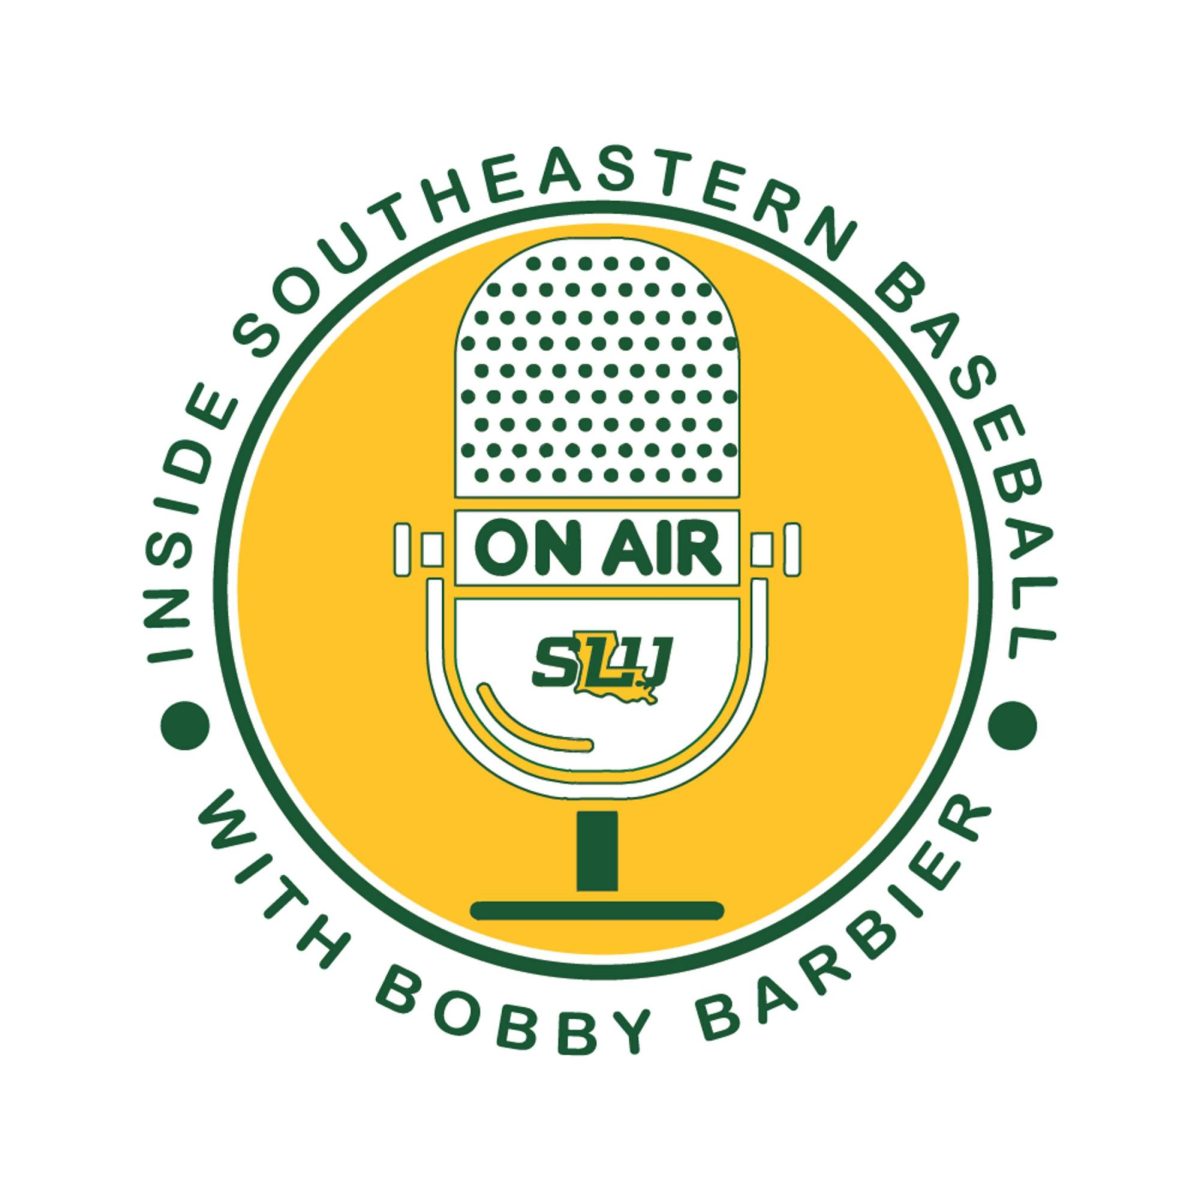 8: Inside Southeastern Baseball with Bobby Barbier - Episode 8